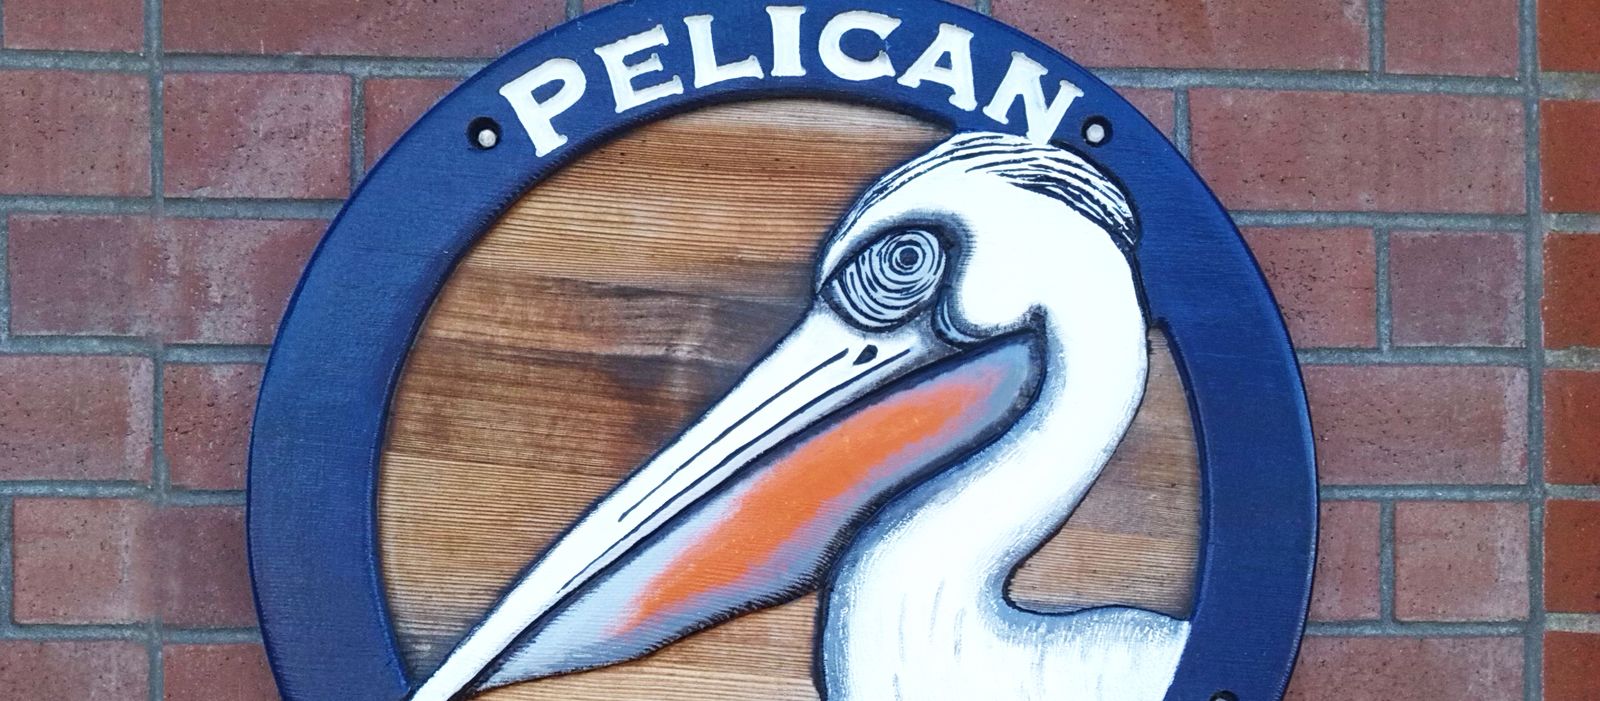 Pelican Pub & Brewery Insidertipp Friederike Oelzen